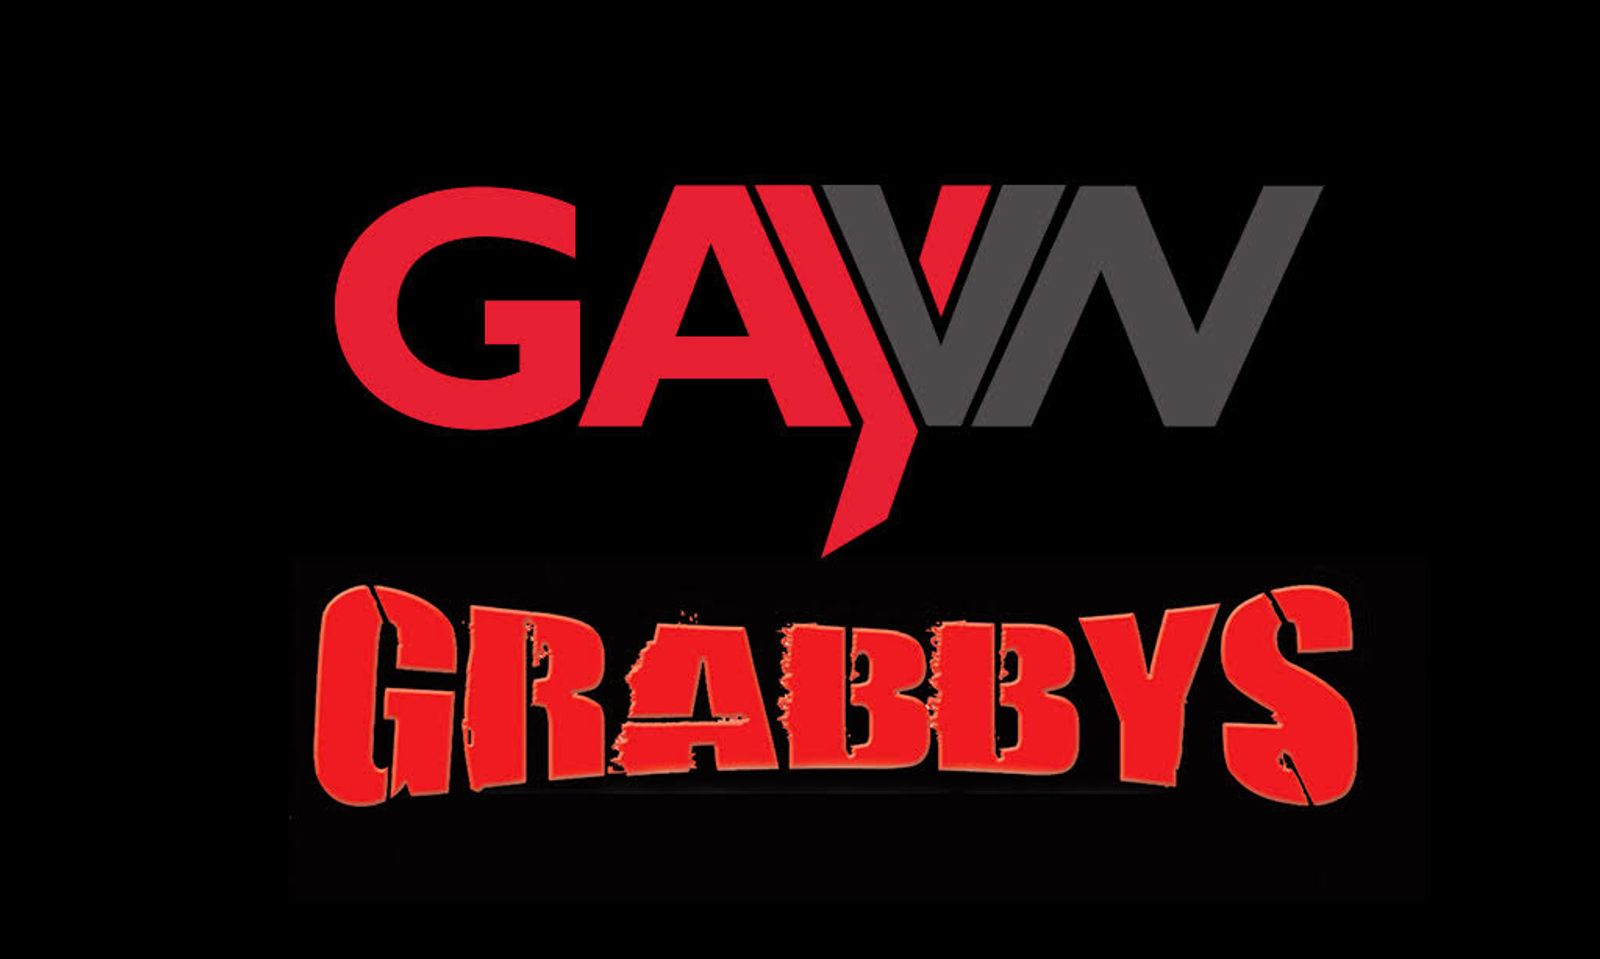 GAYVN to Sponsor Official 2017 Grabby Awards Party